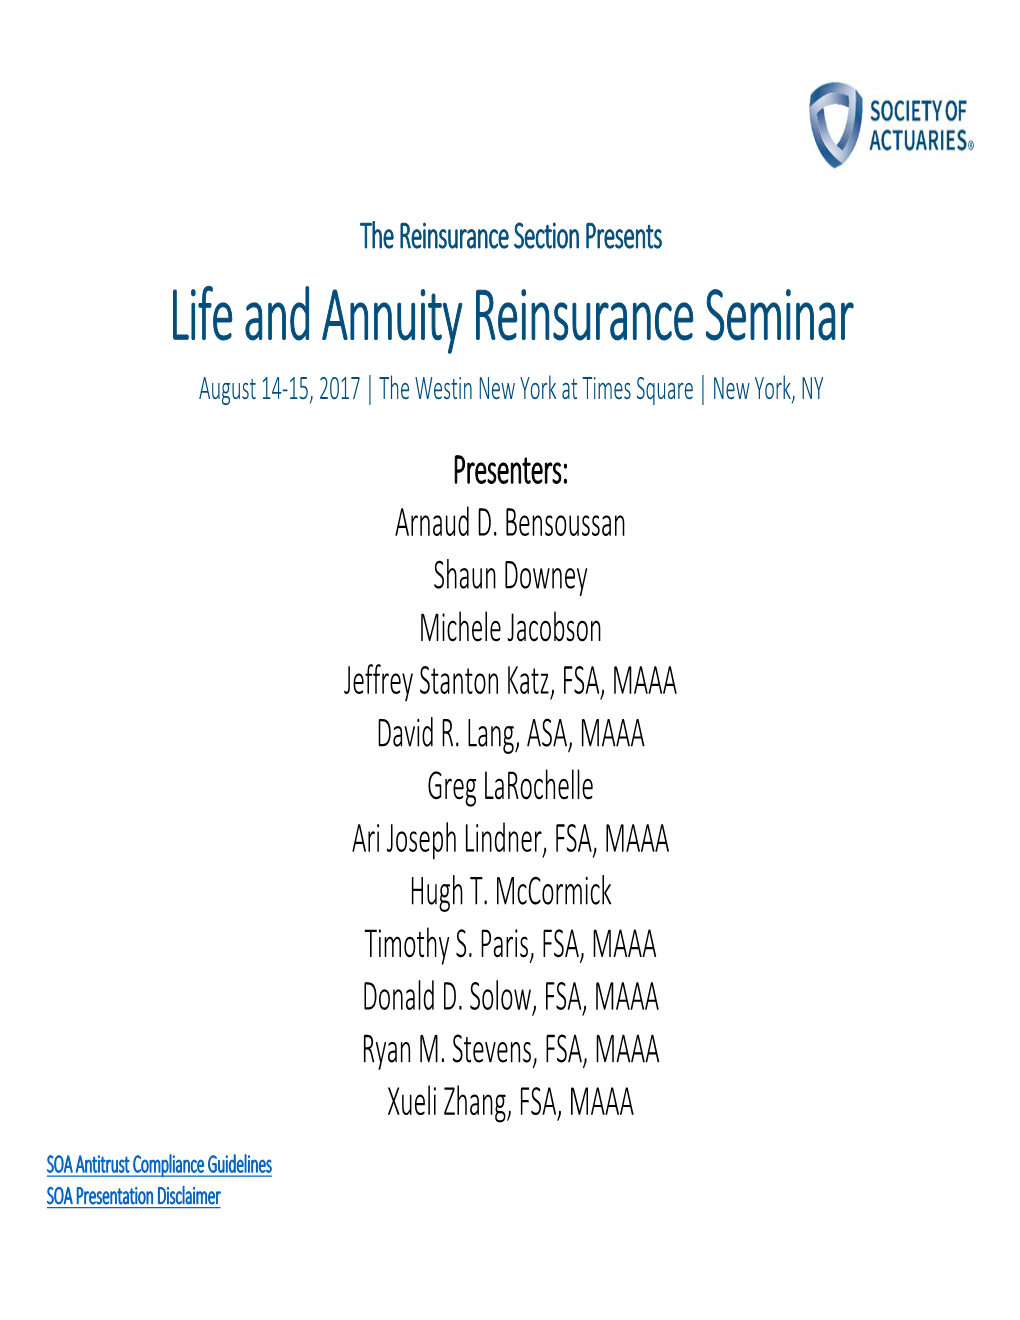 Life and Annuity Reinsurance Seminar Presentations